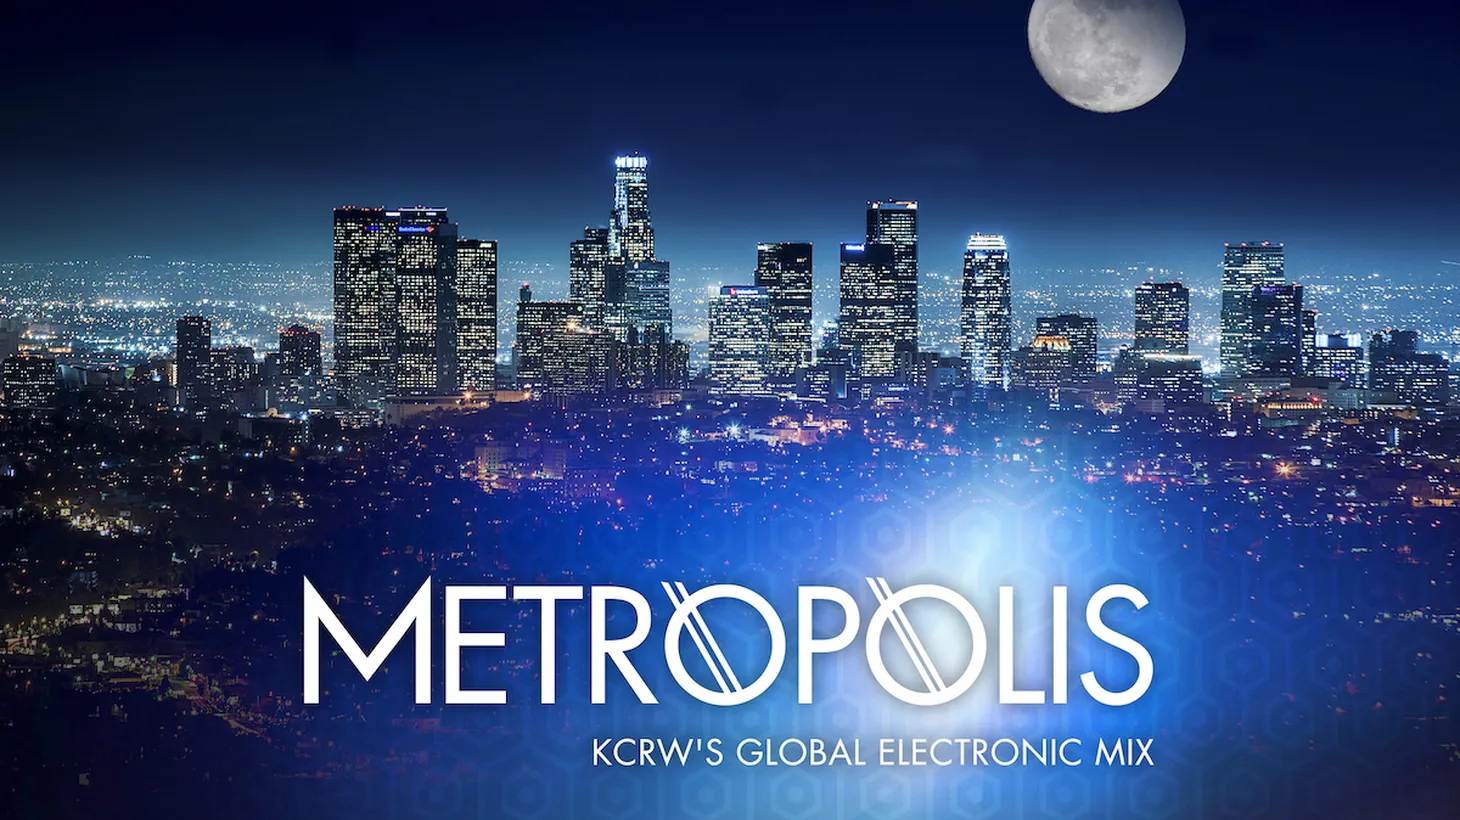 Metropolis playlist, August 6, 2022.